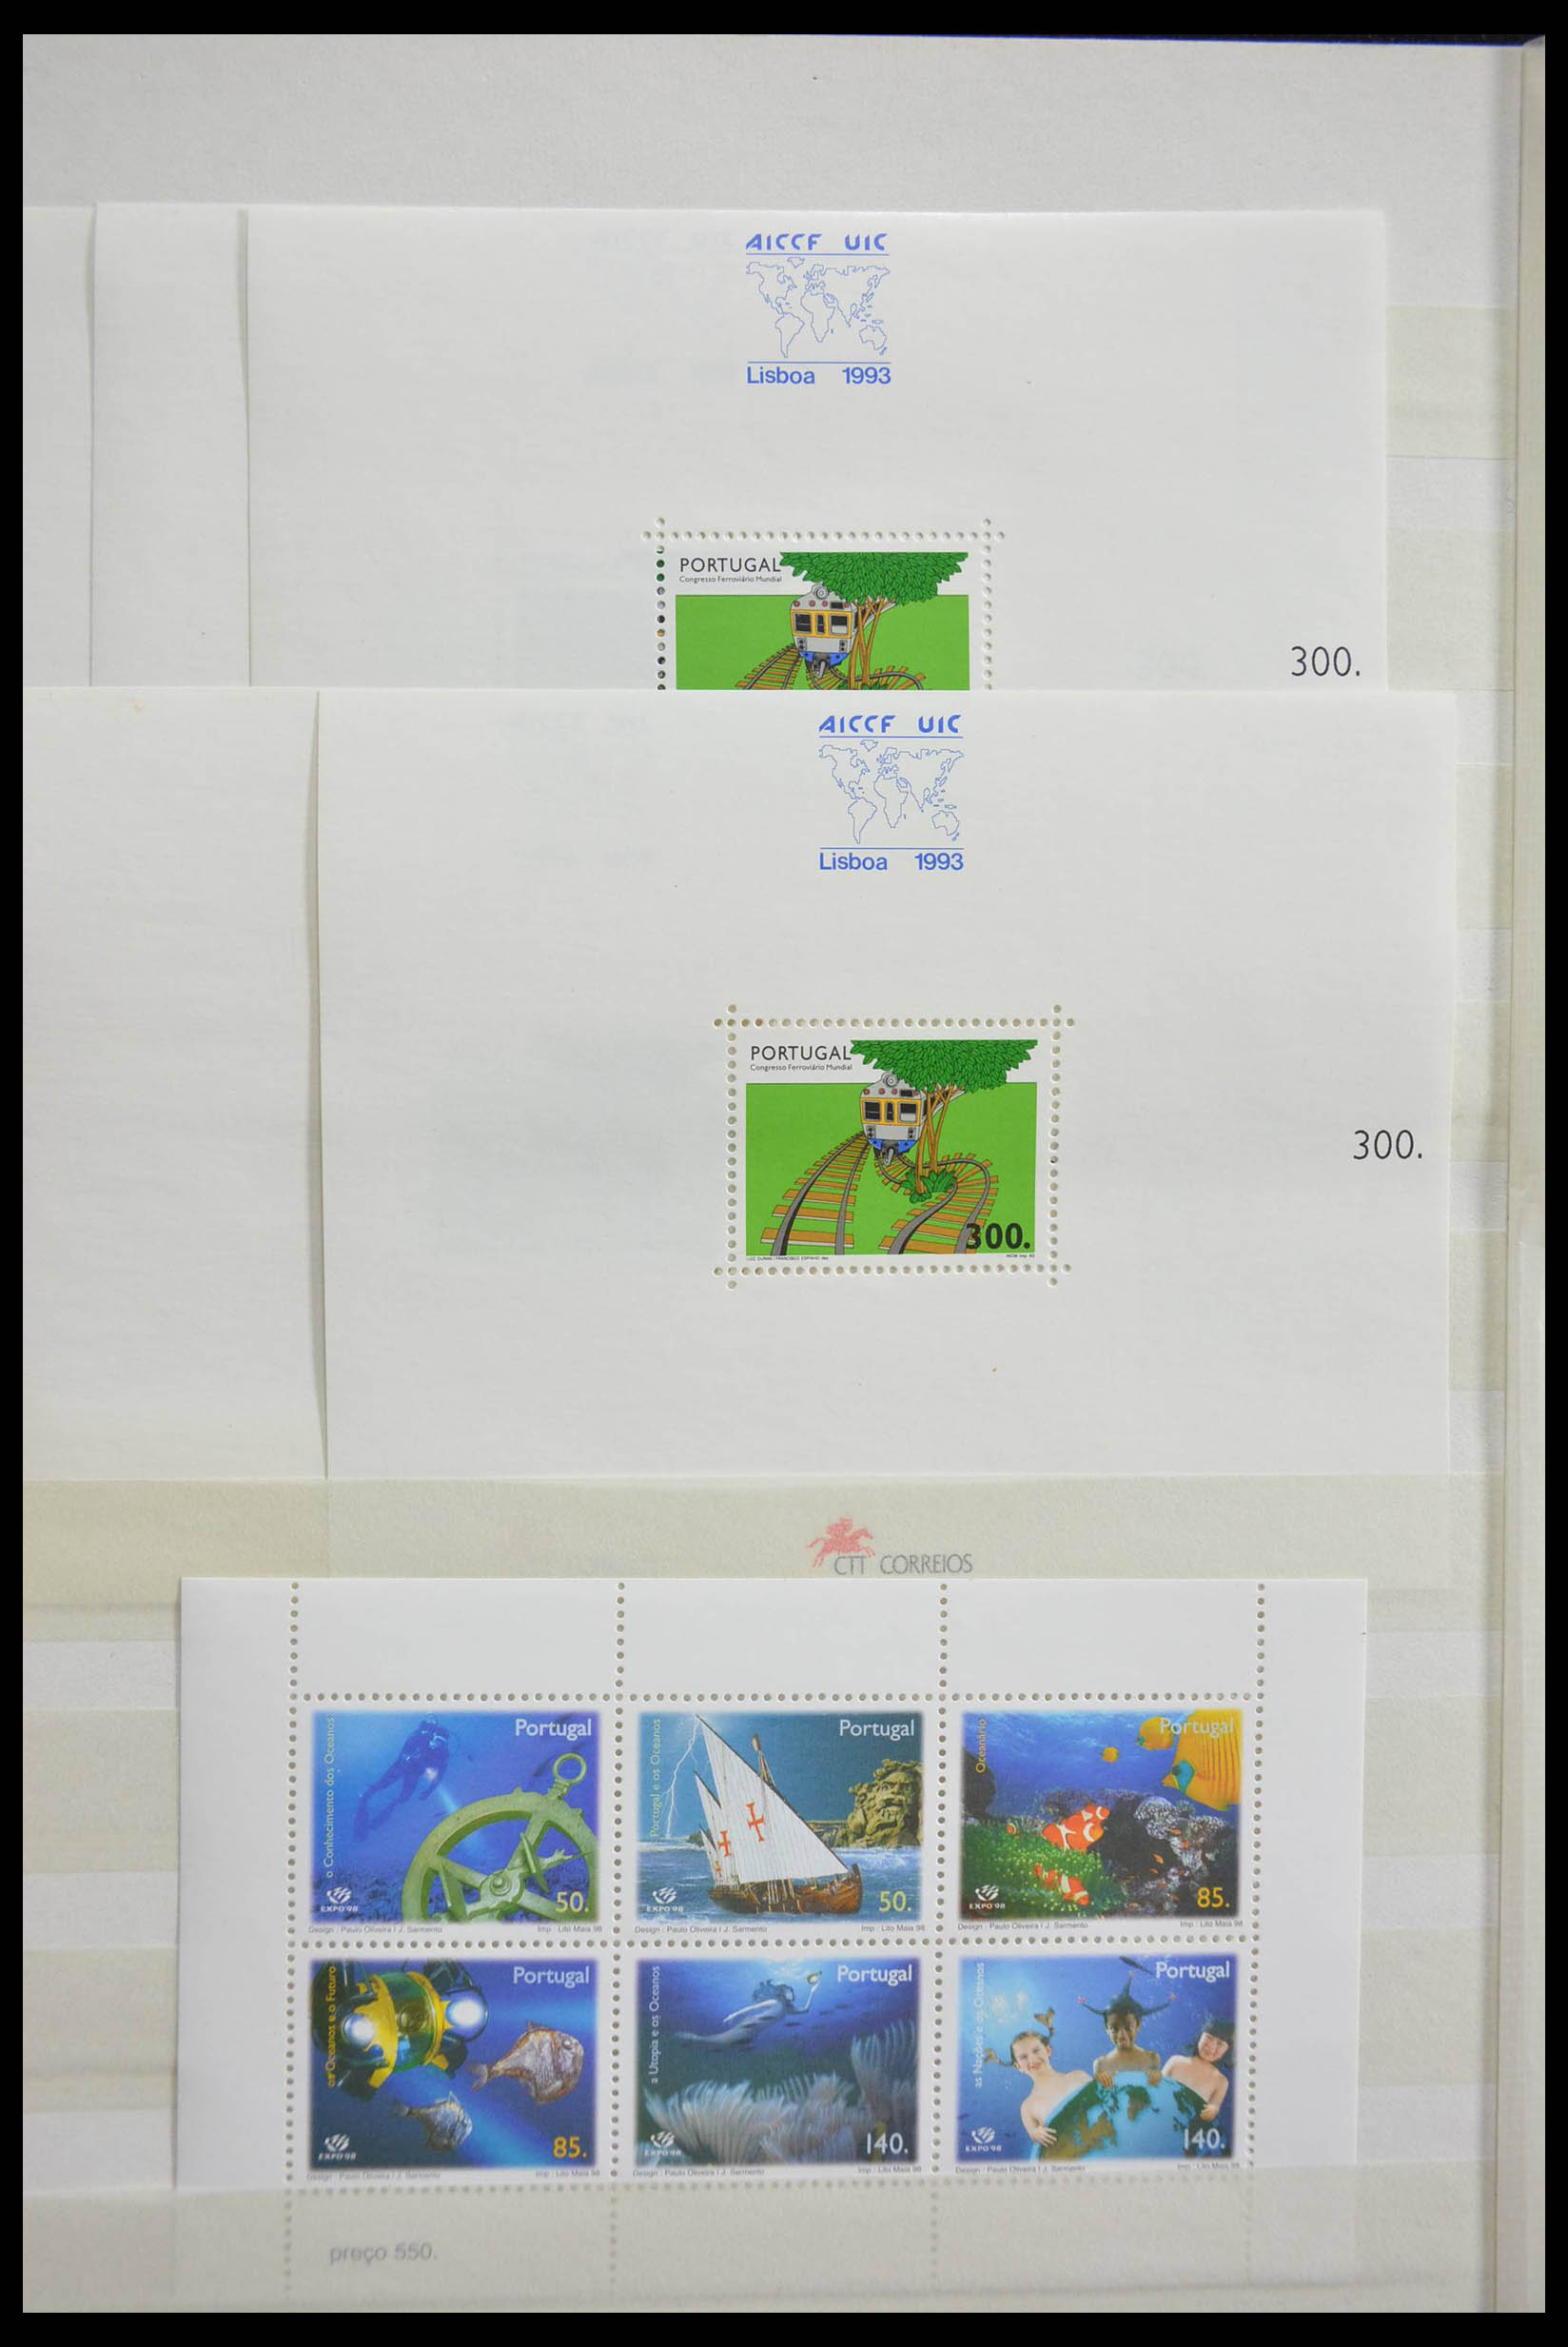 28540 022 - 28540 Portugal souvenir sheets.